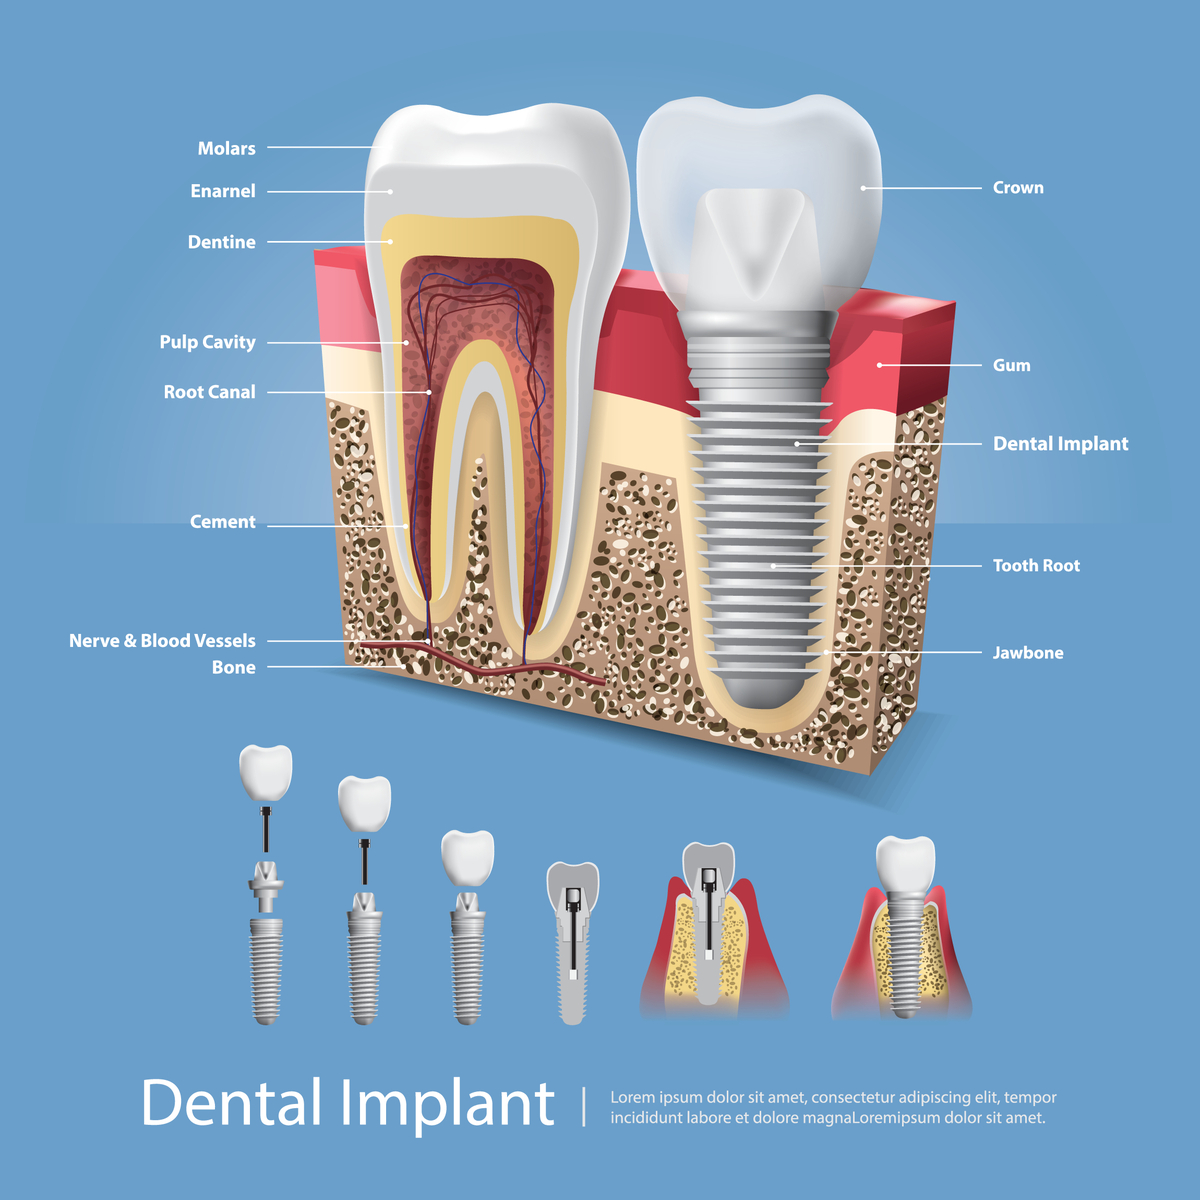 Dental Implant Clayton, MO | Tooth Pain | Restorative Dentistry | Cosmetic Dentistry Near Clayton, MO